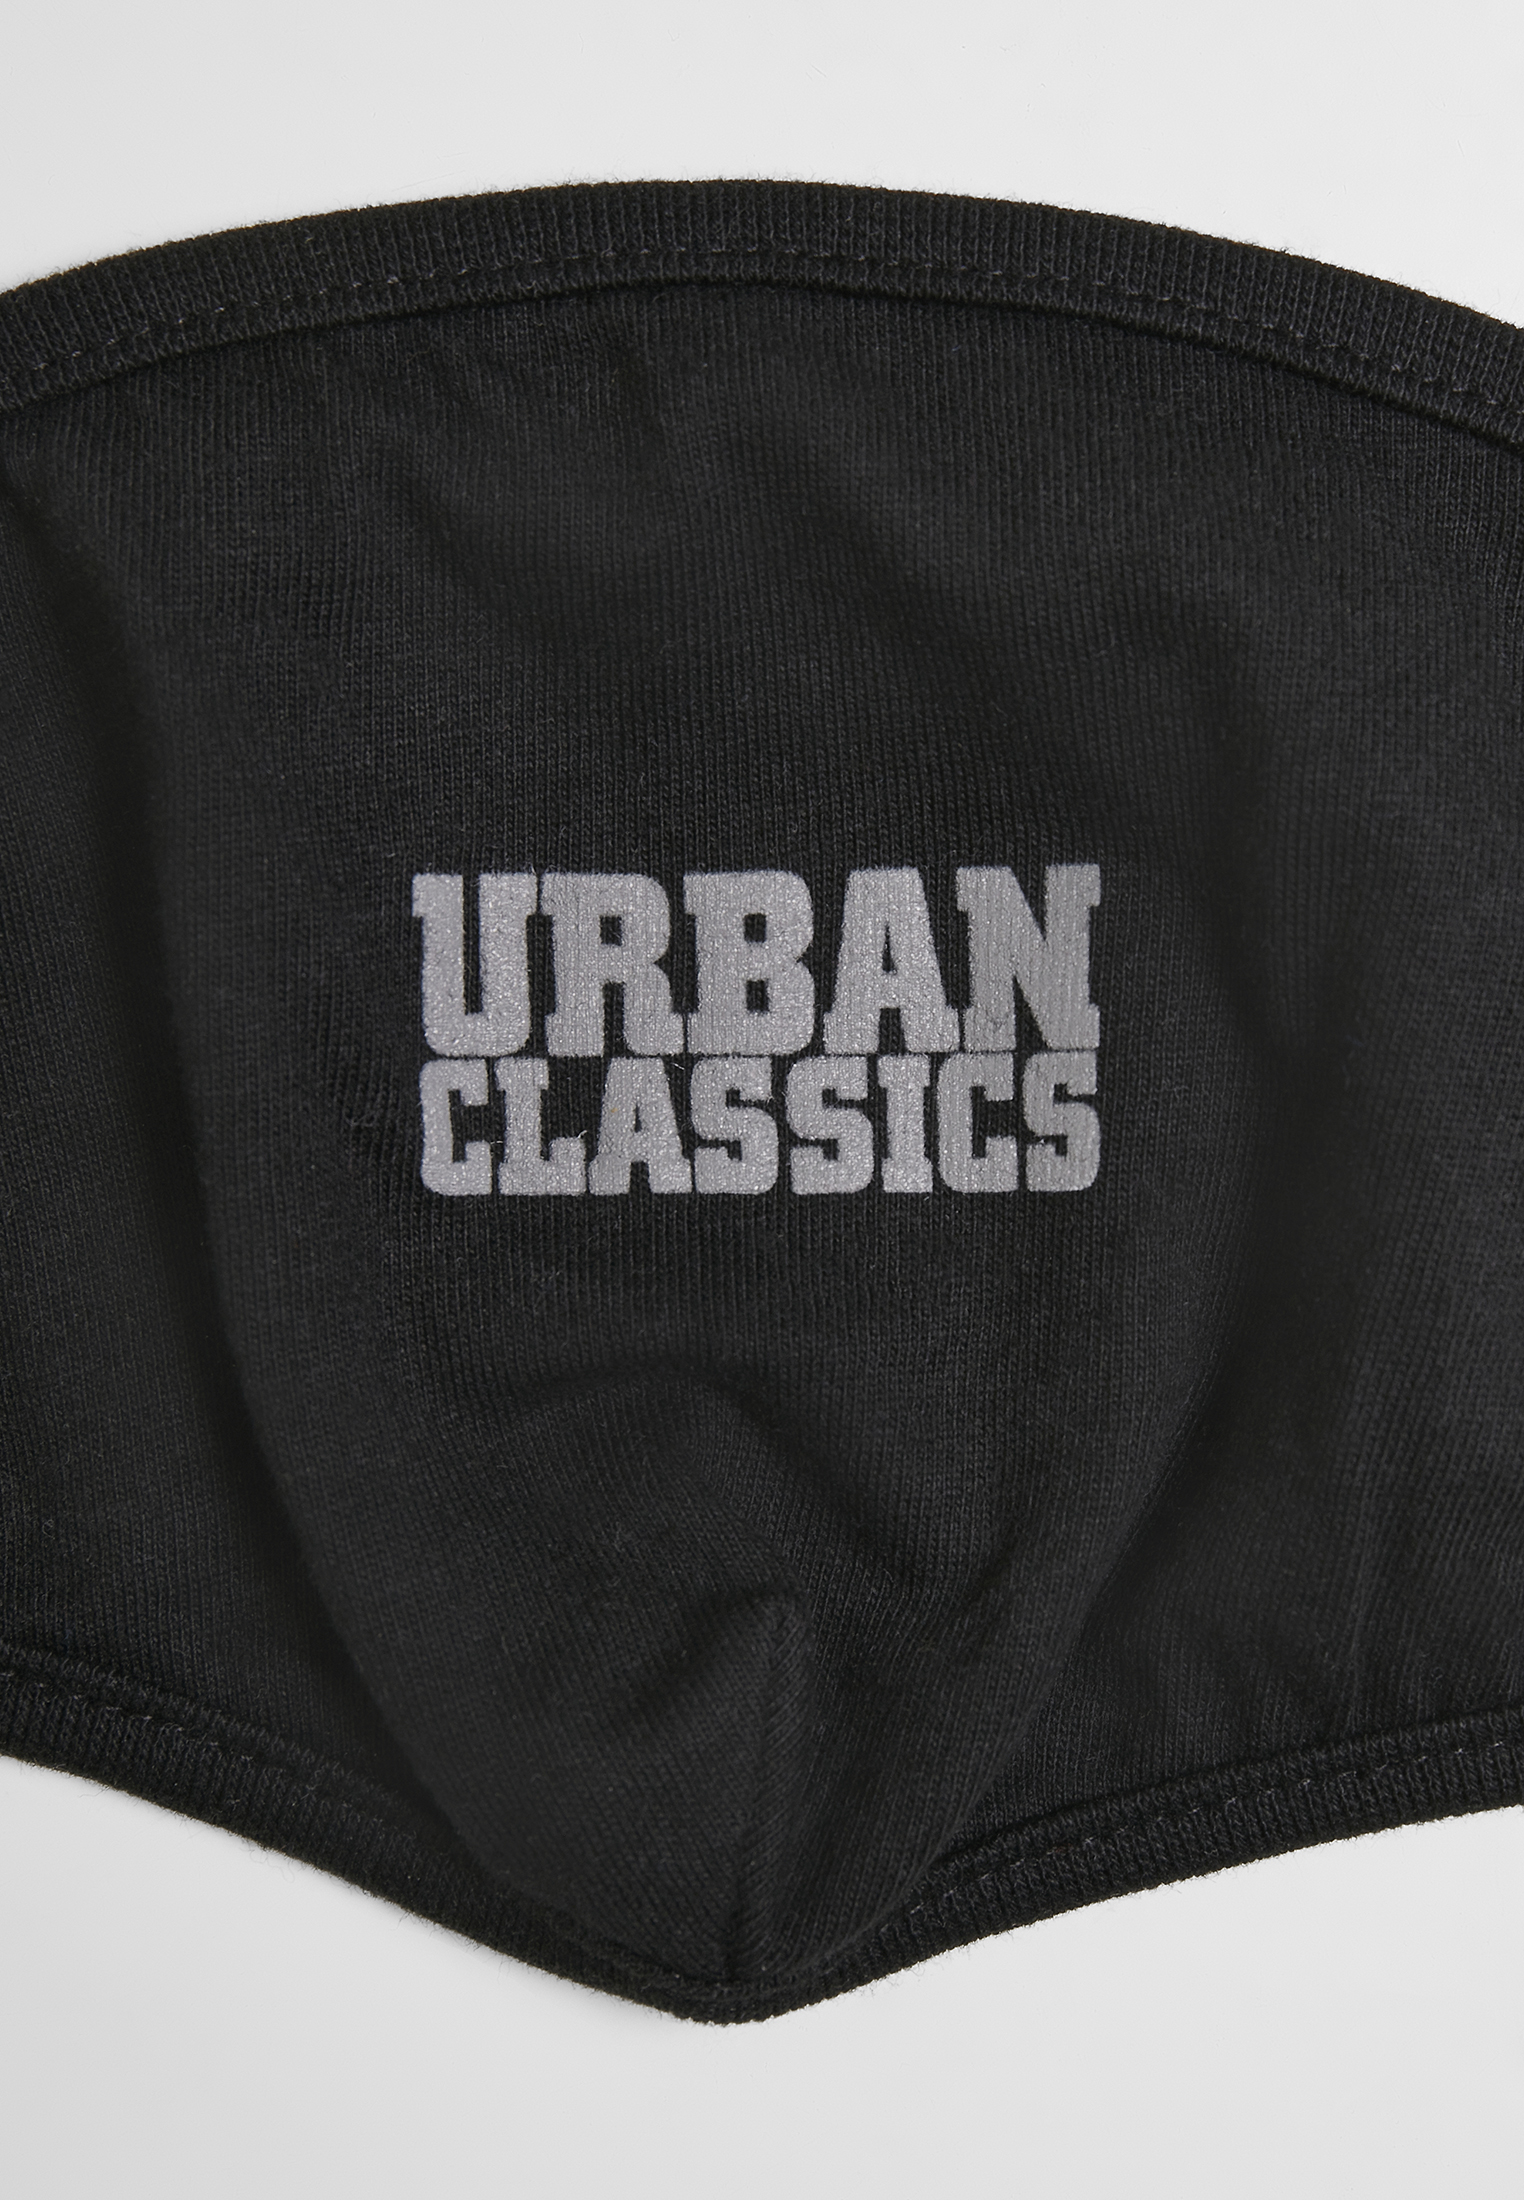 Masken Urban Classics Cotton Face Mask 2-Pack in Farbe black/white+black/grey